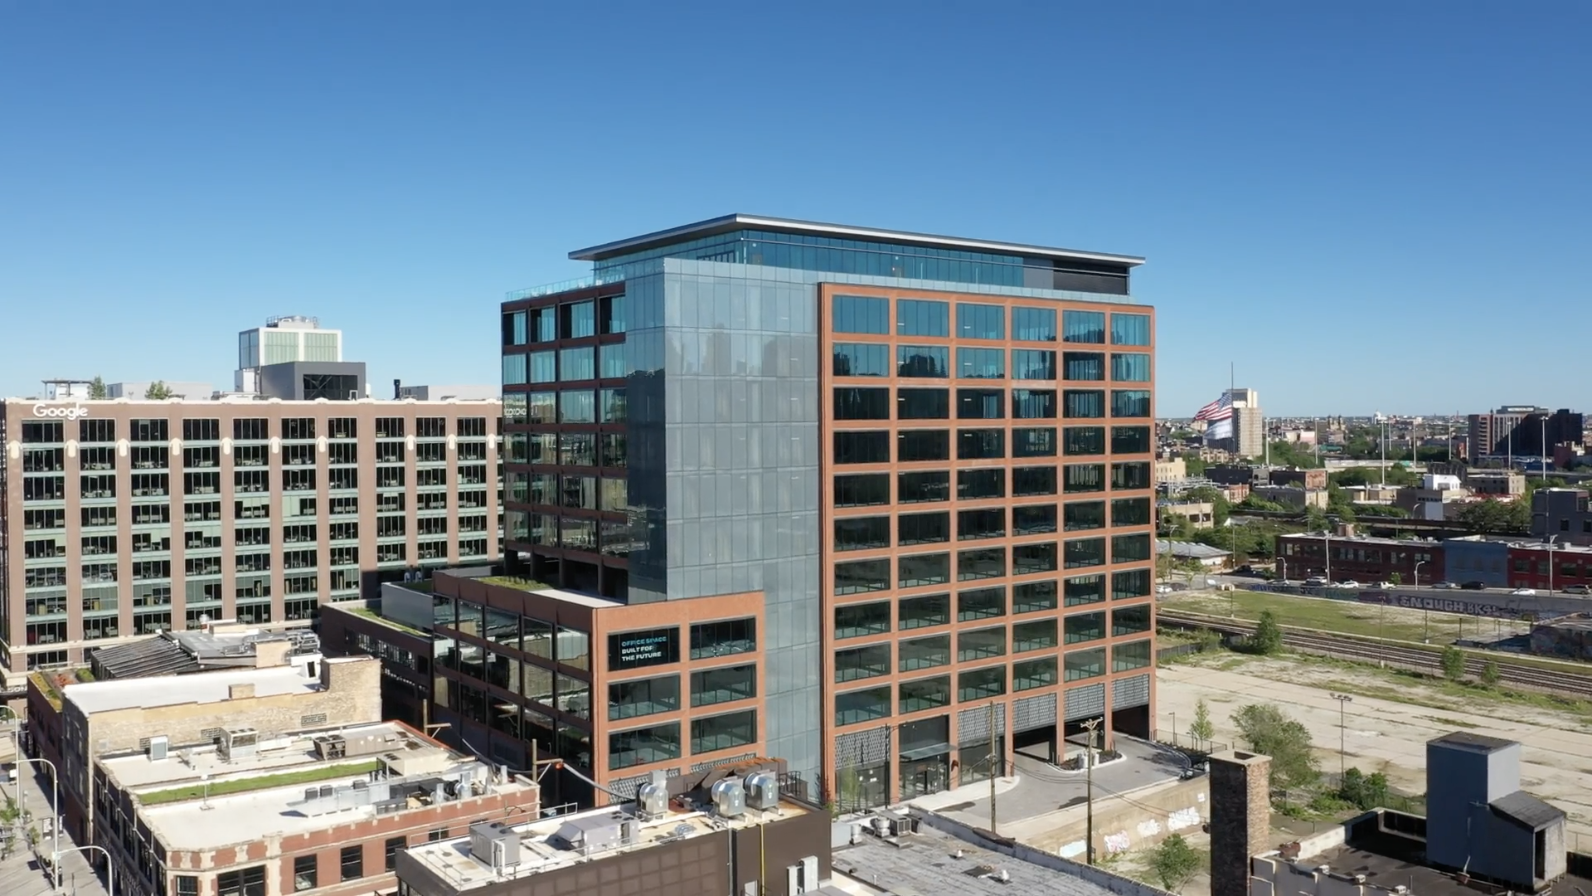 Syntellis will open a new headquarters at 302 N. Sangamon St. in Chicago’s Fulton Market neighborhood.